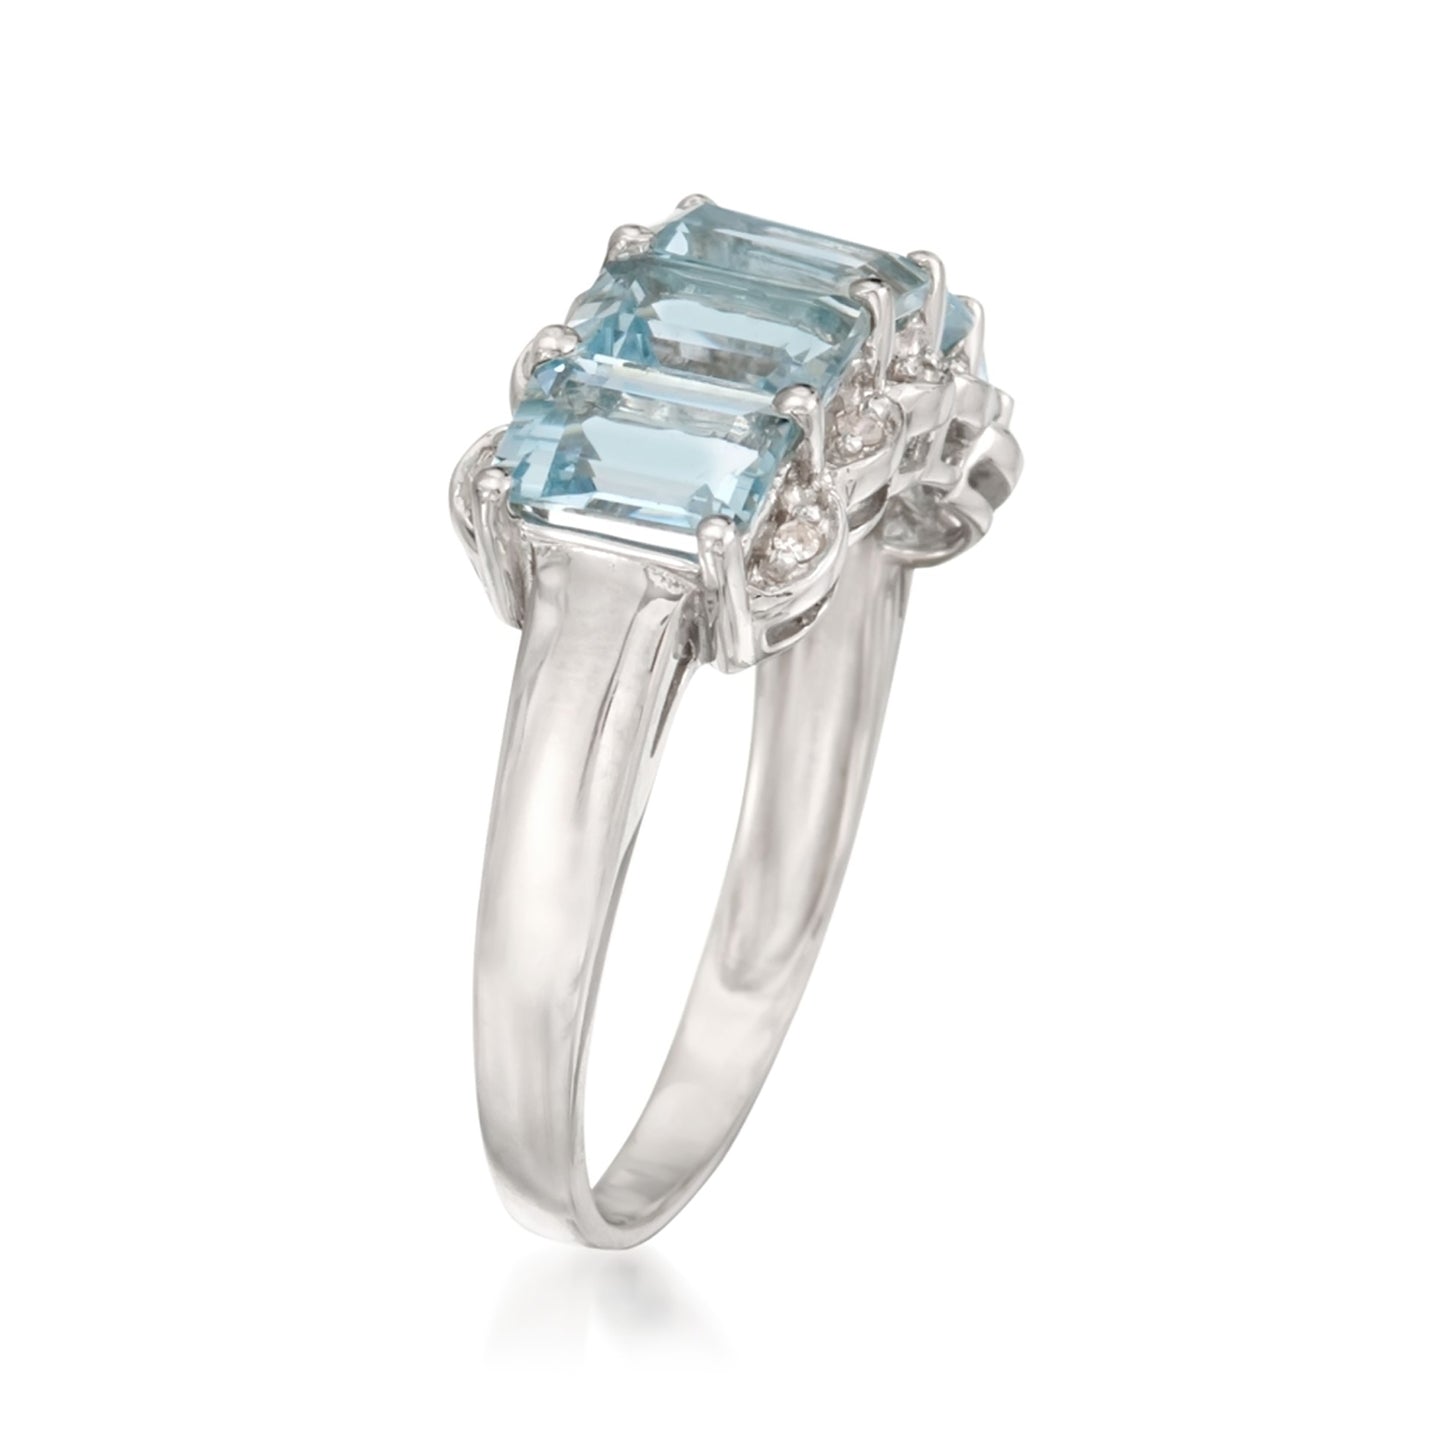 Pinctore Sterling Silver 2.9ctw Aquamarine & Diamond Ring, Size 7